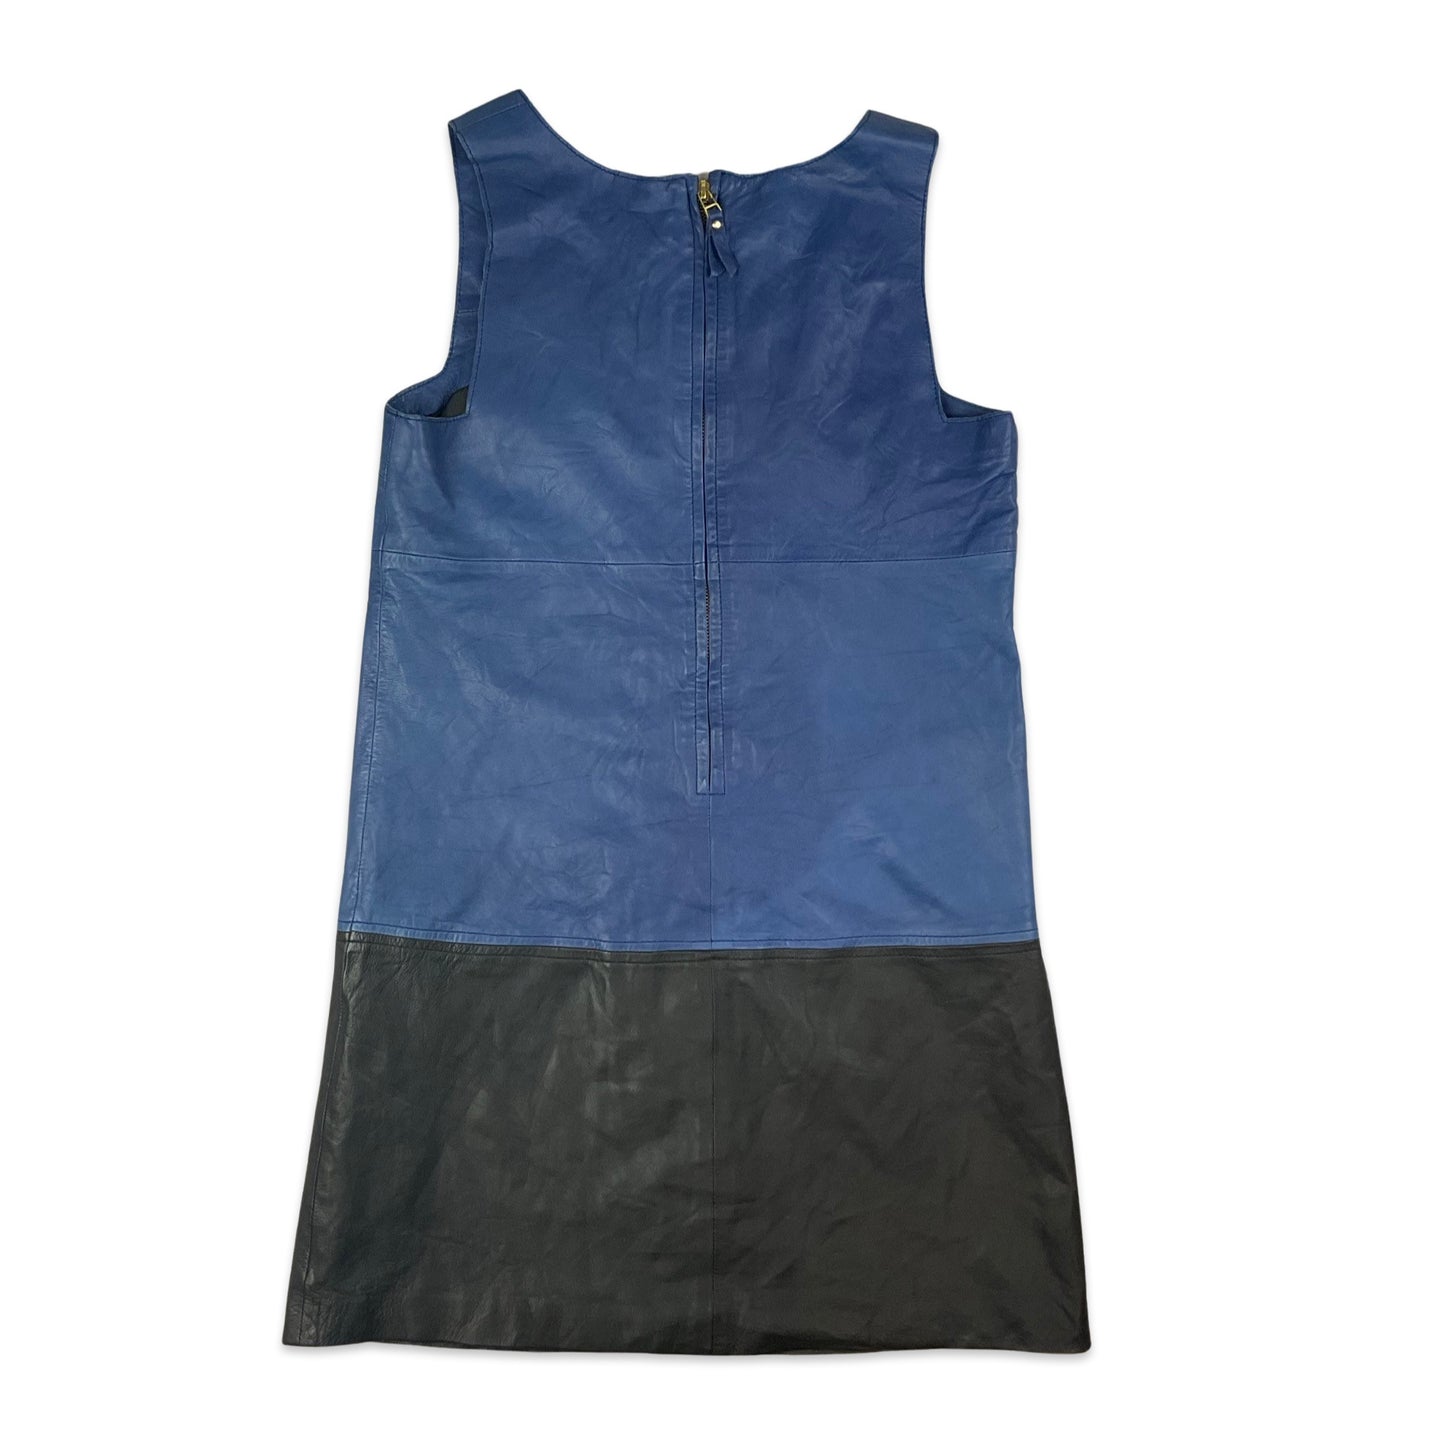 90s Blue & Black Leather Shift Dress